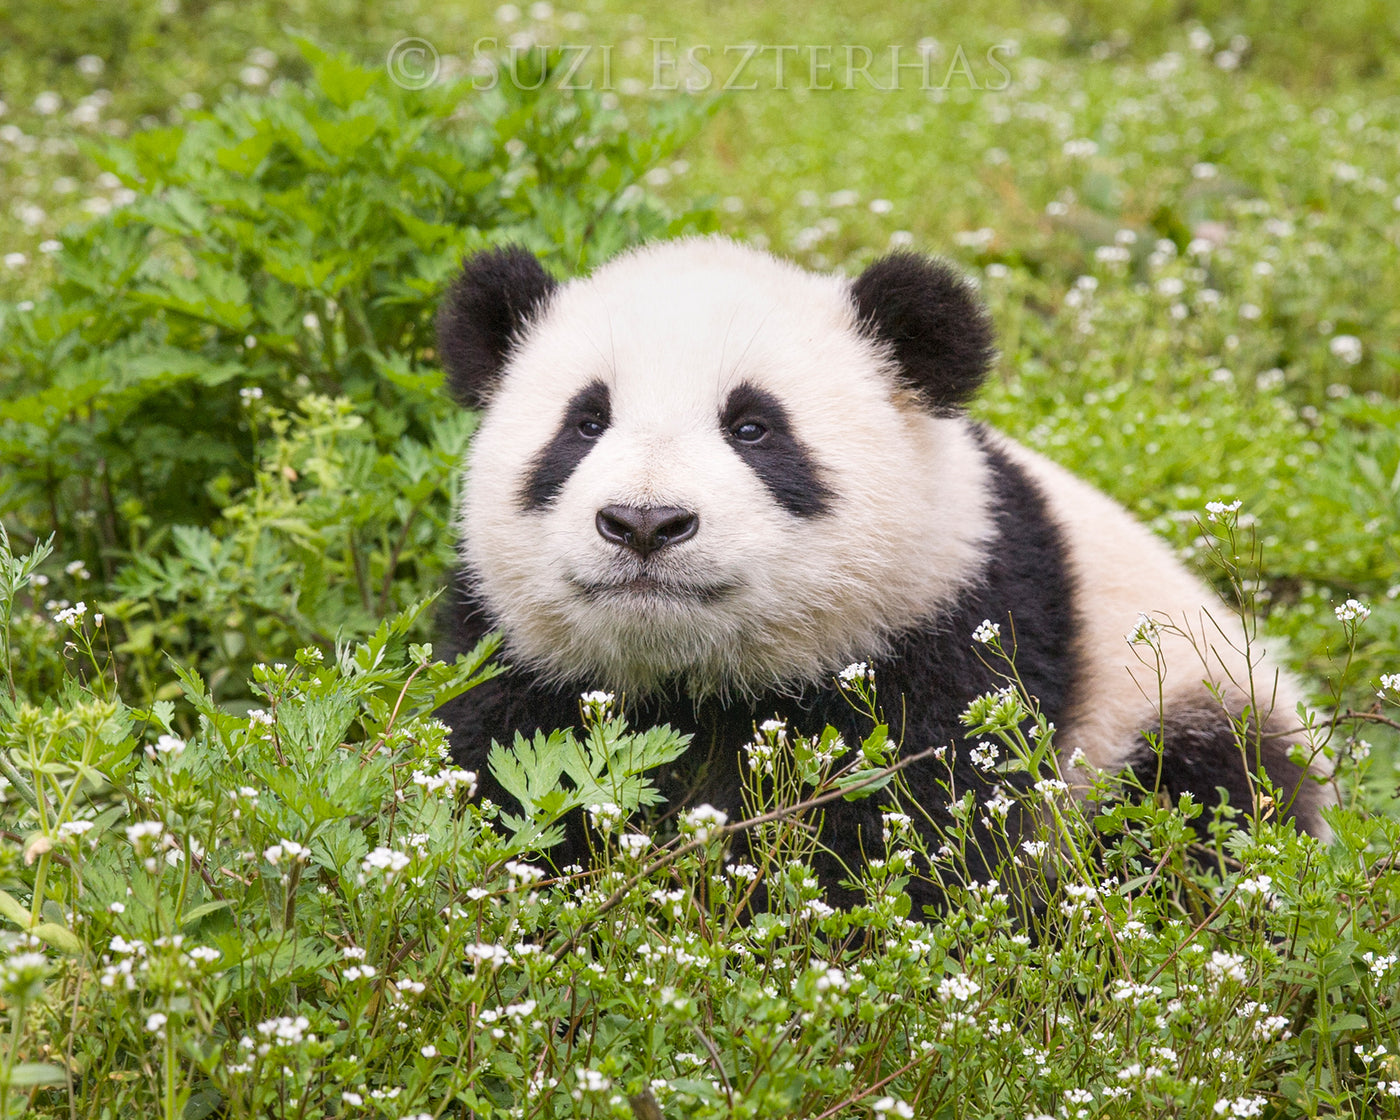 Cute Baby Panda Photo – Baby Animal Prints by Suzi